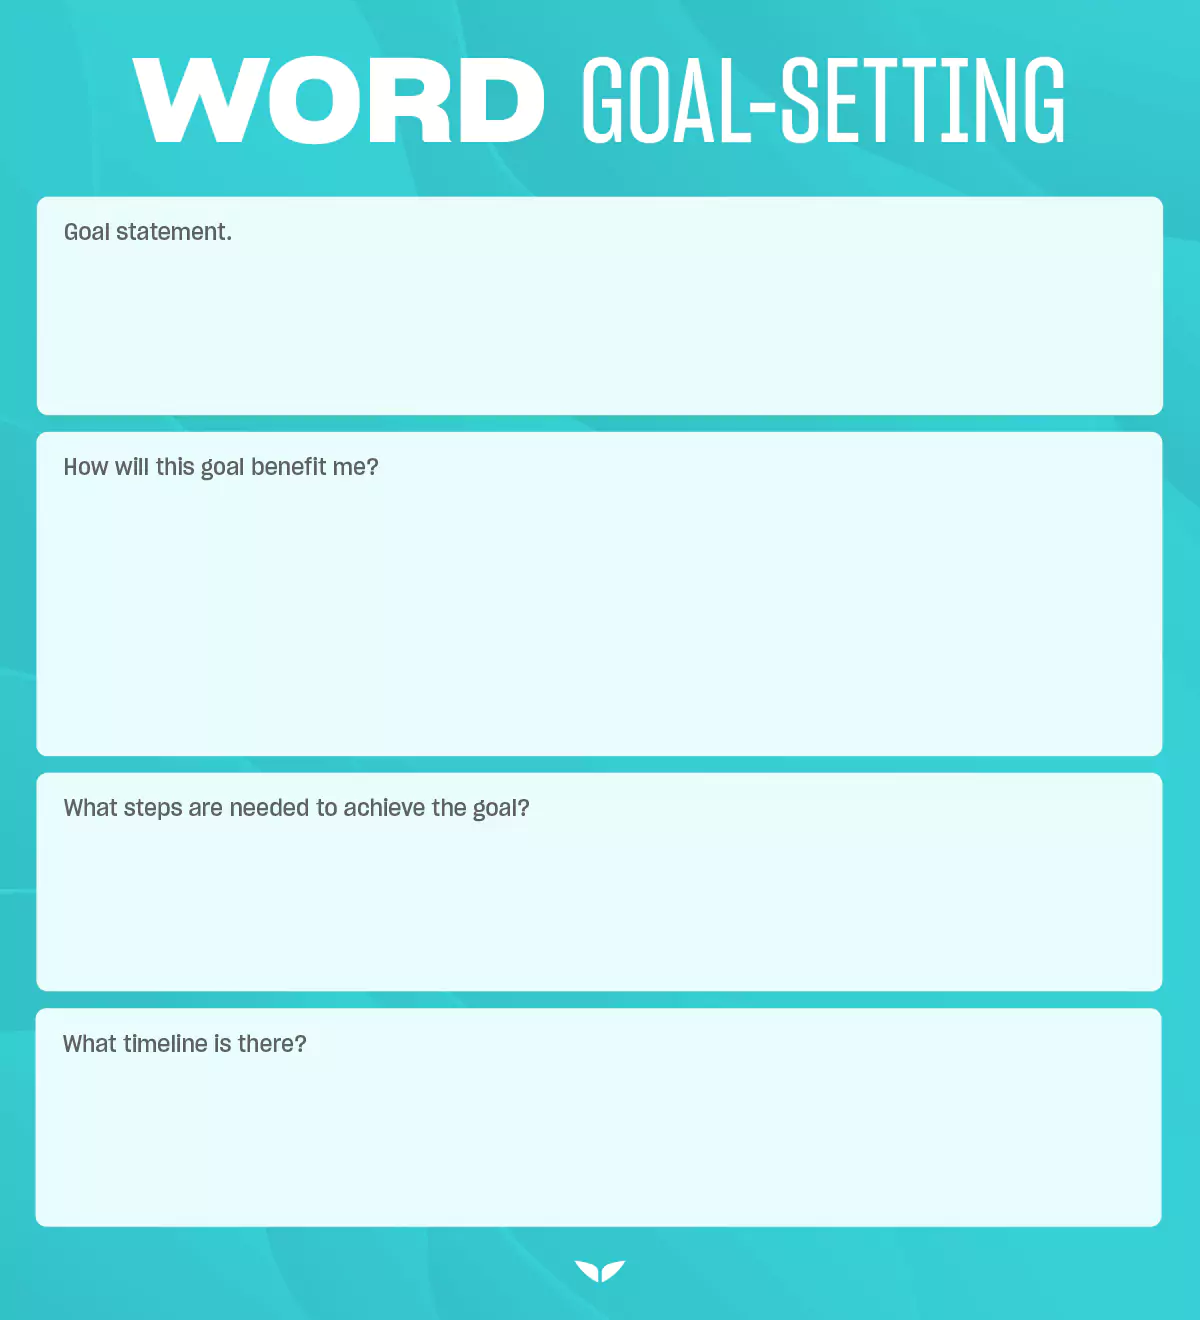 Word Goal-Setting Template